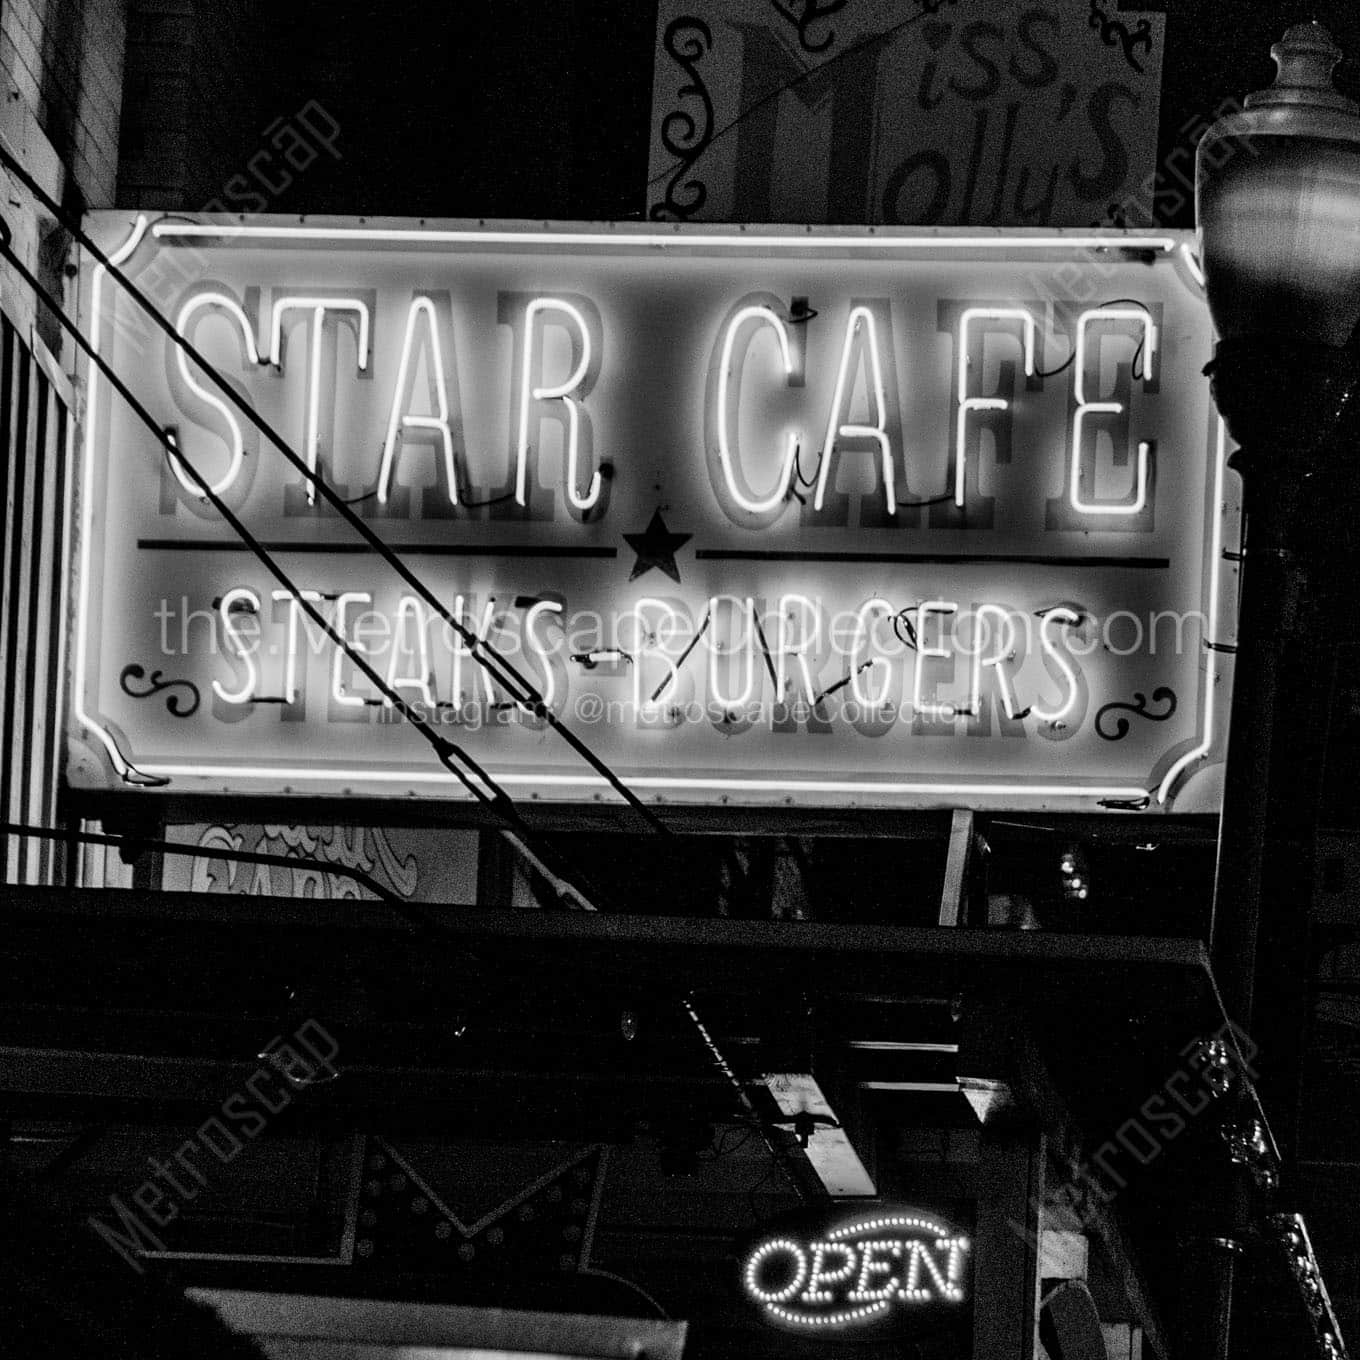 star cafe at night Black & White Office Art